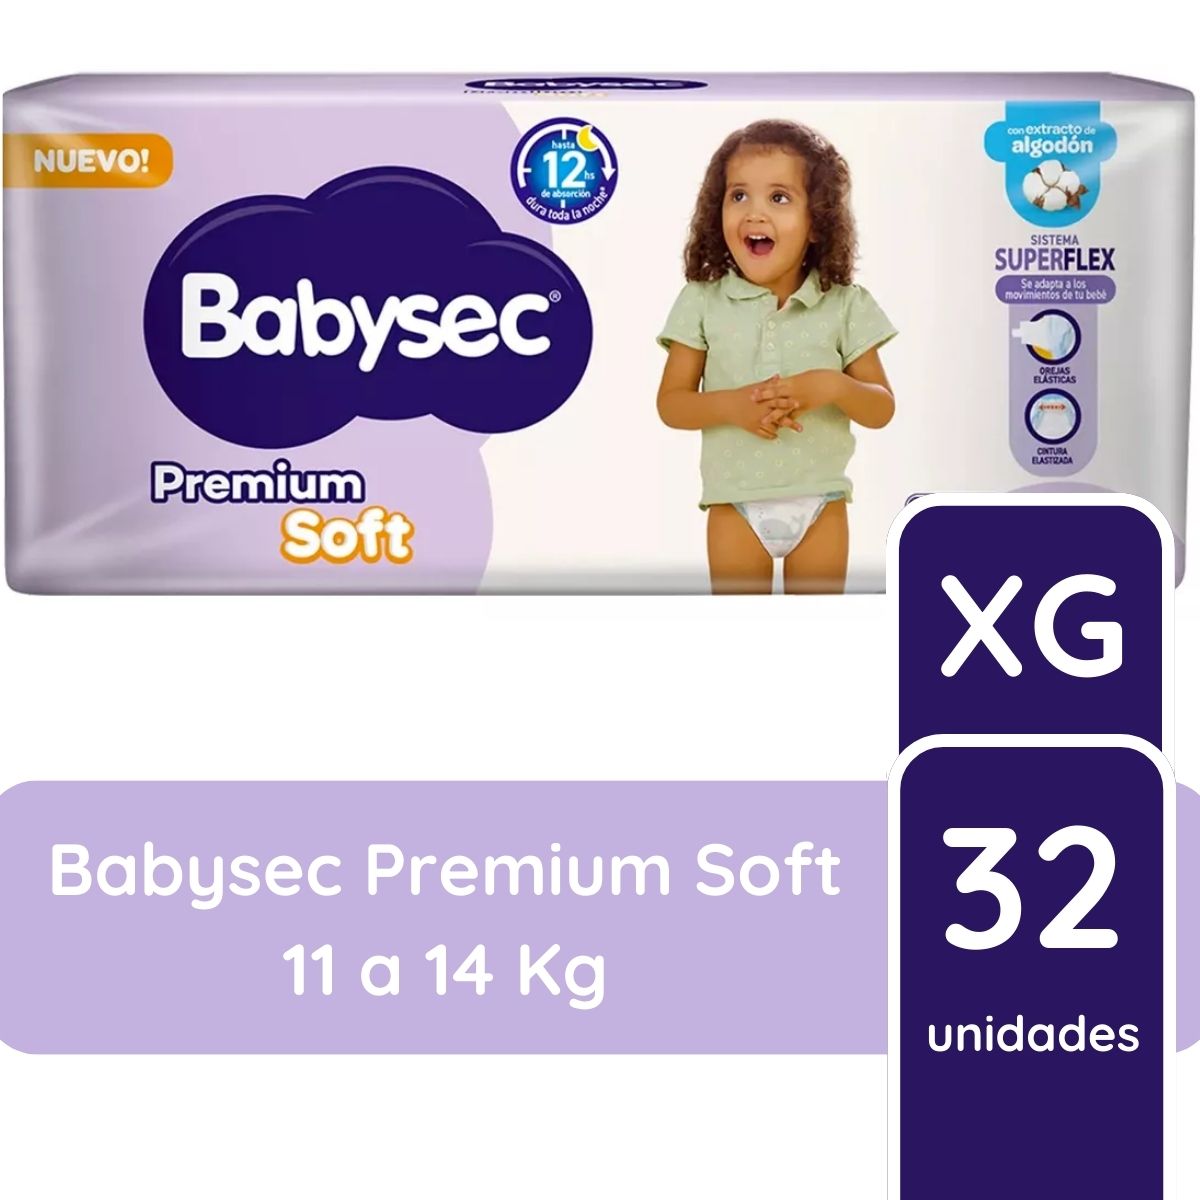 Pañales Babysec Premium Soft XG 32 unidades